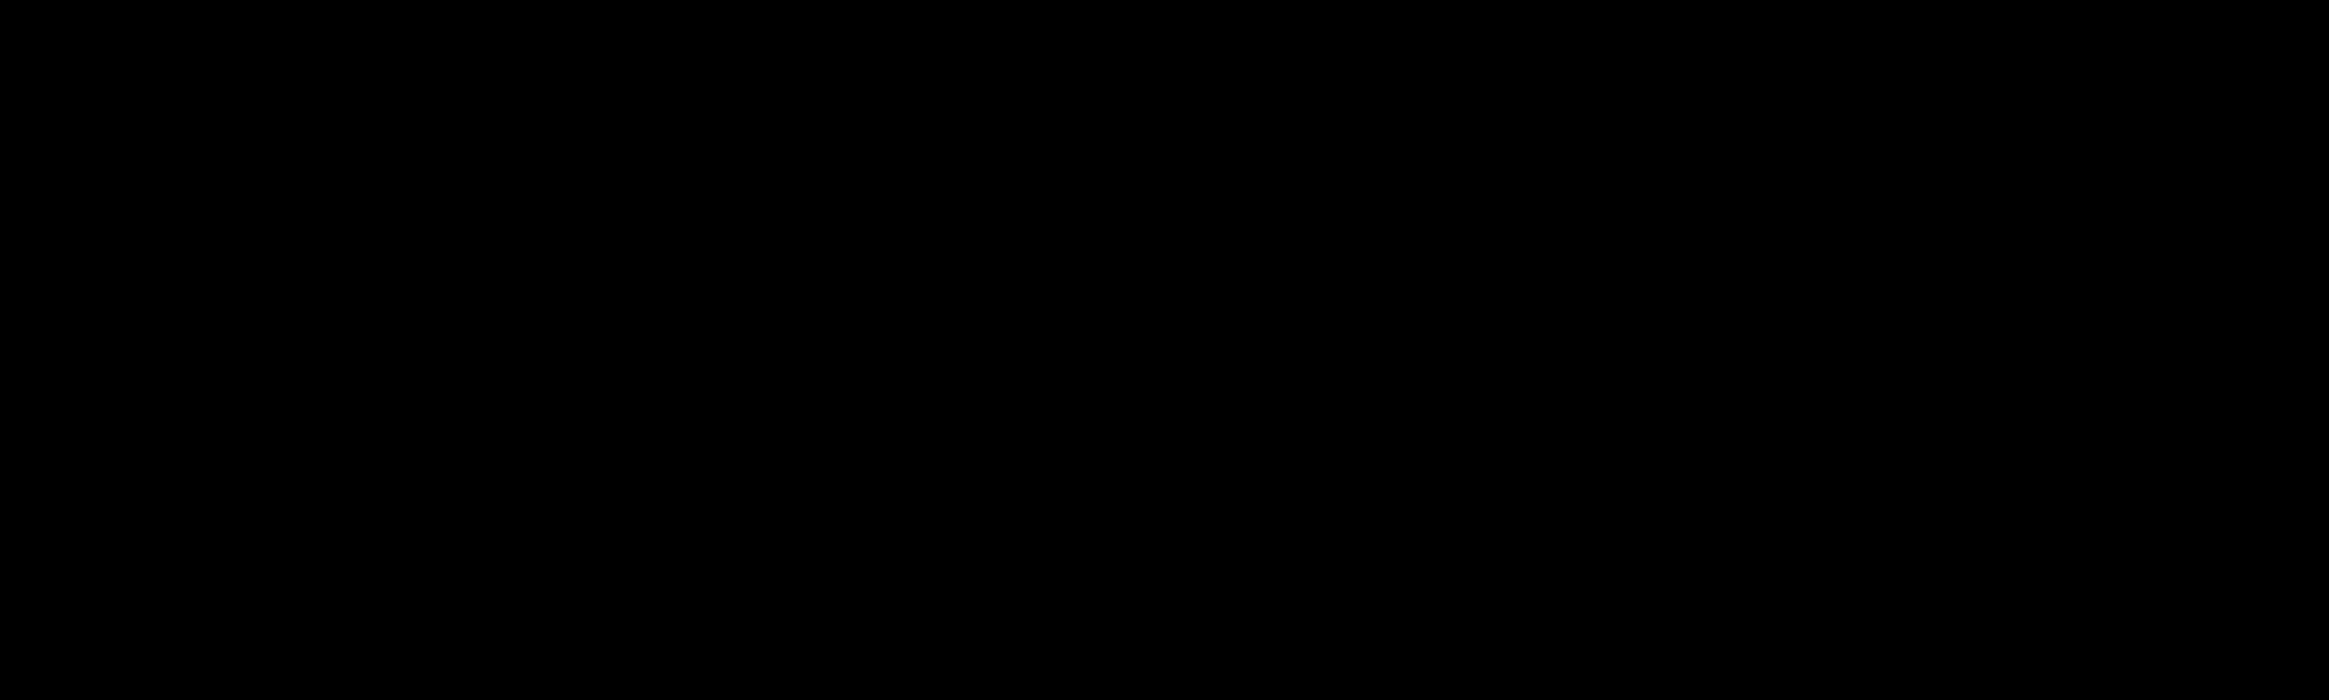 Spotify Logo Black Background PNG